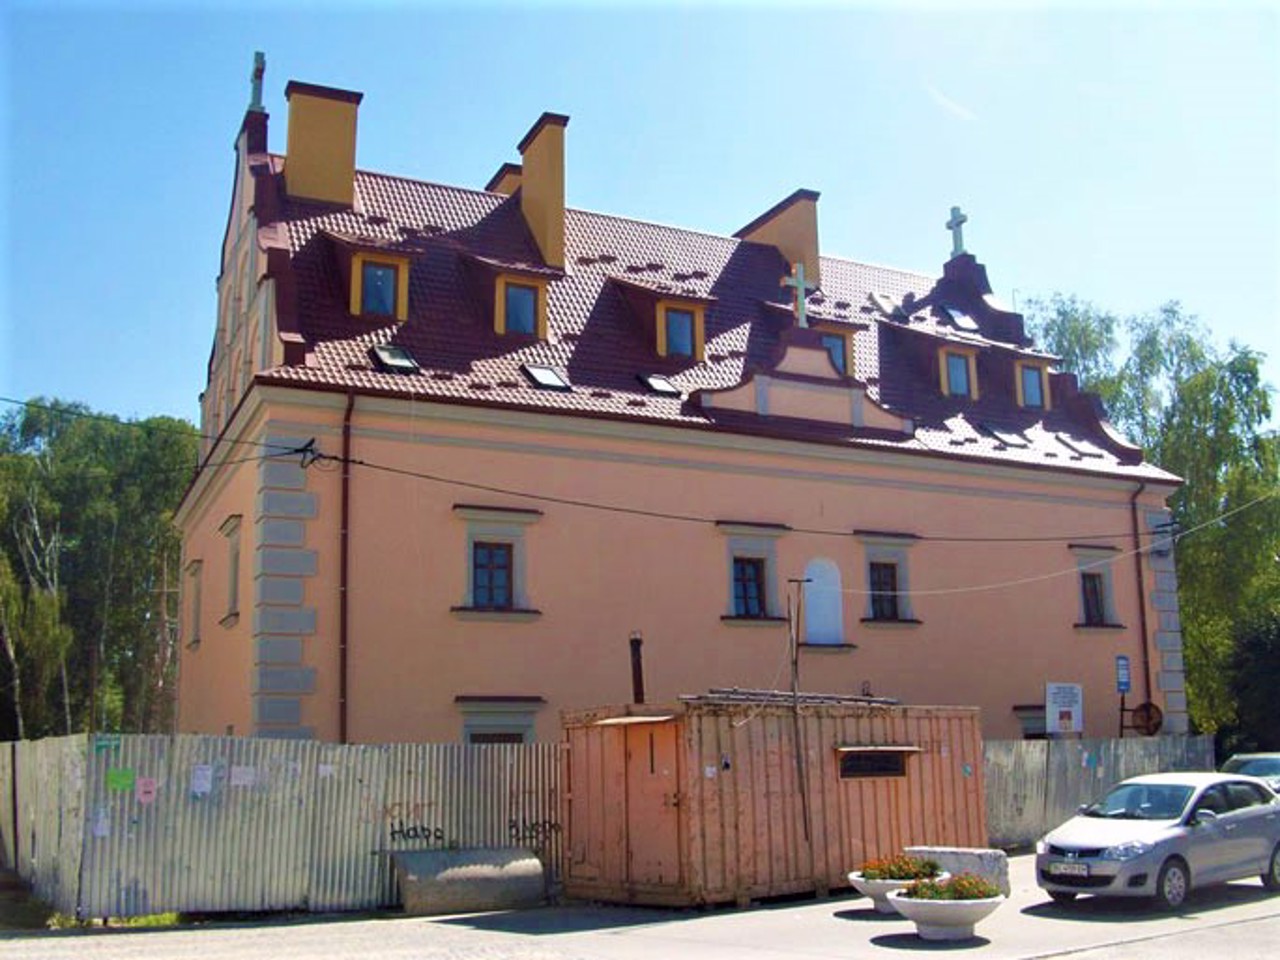 Franciscans Monastery (Boyar Court), Zolochiv